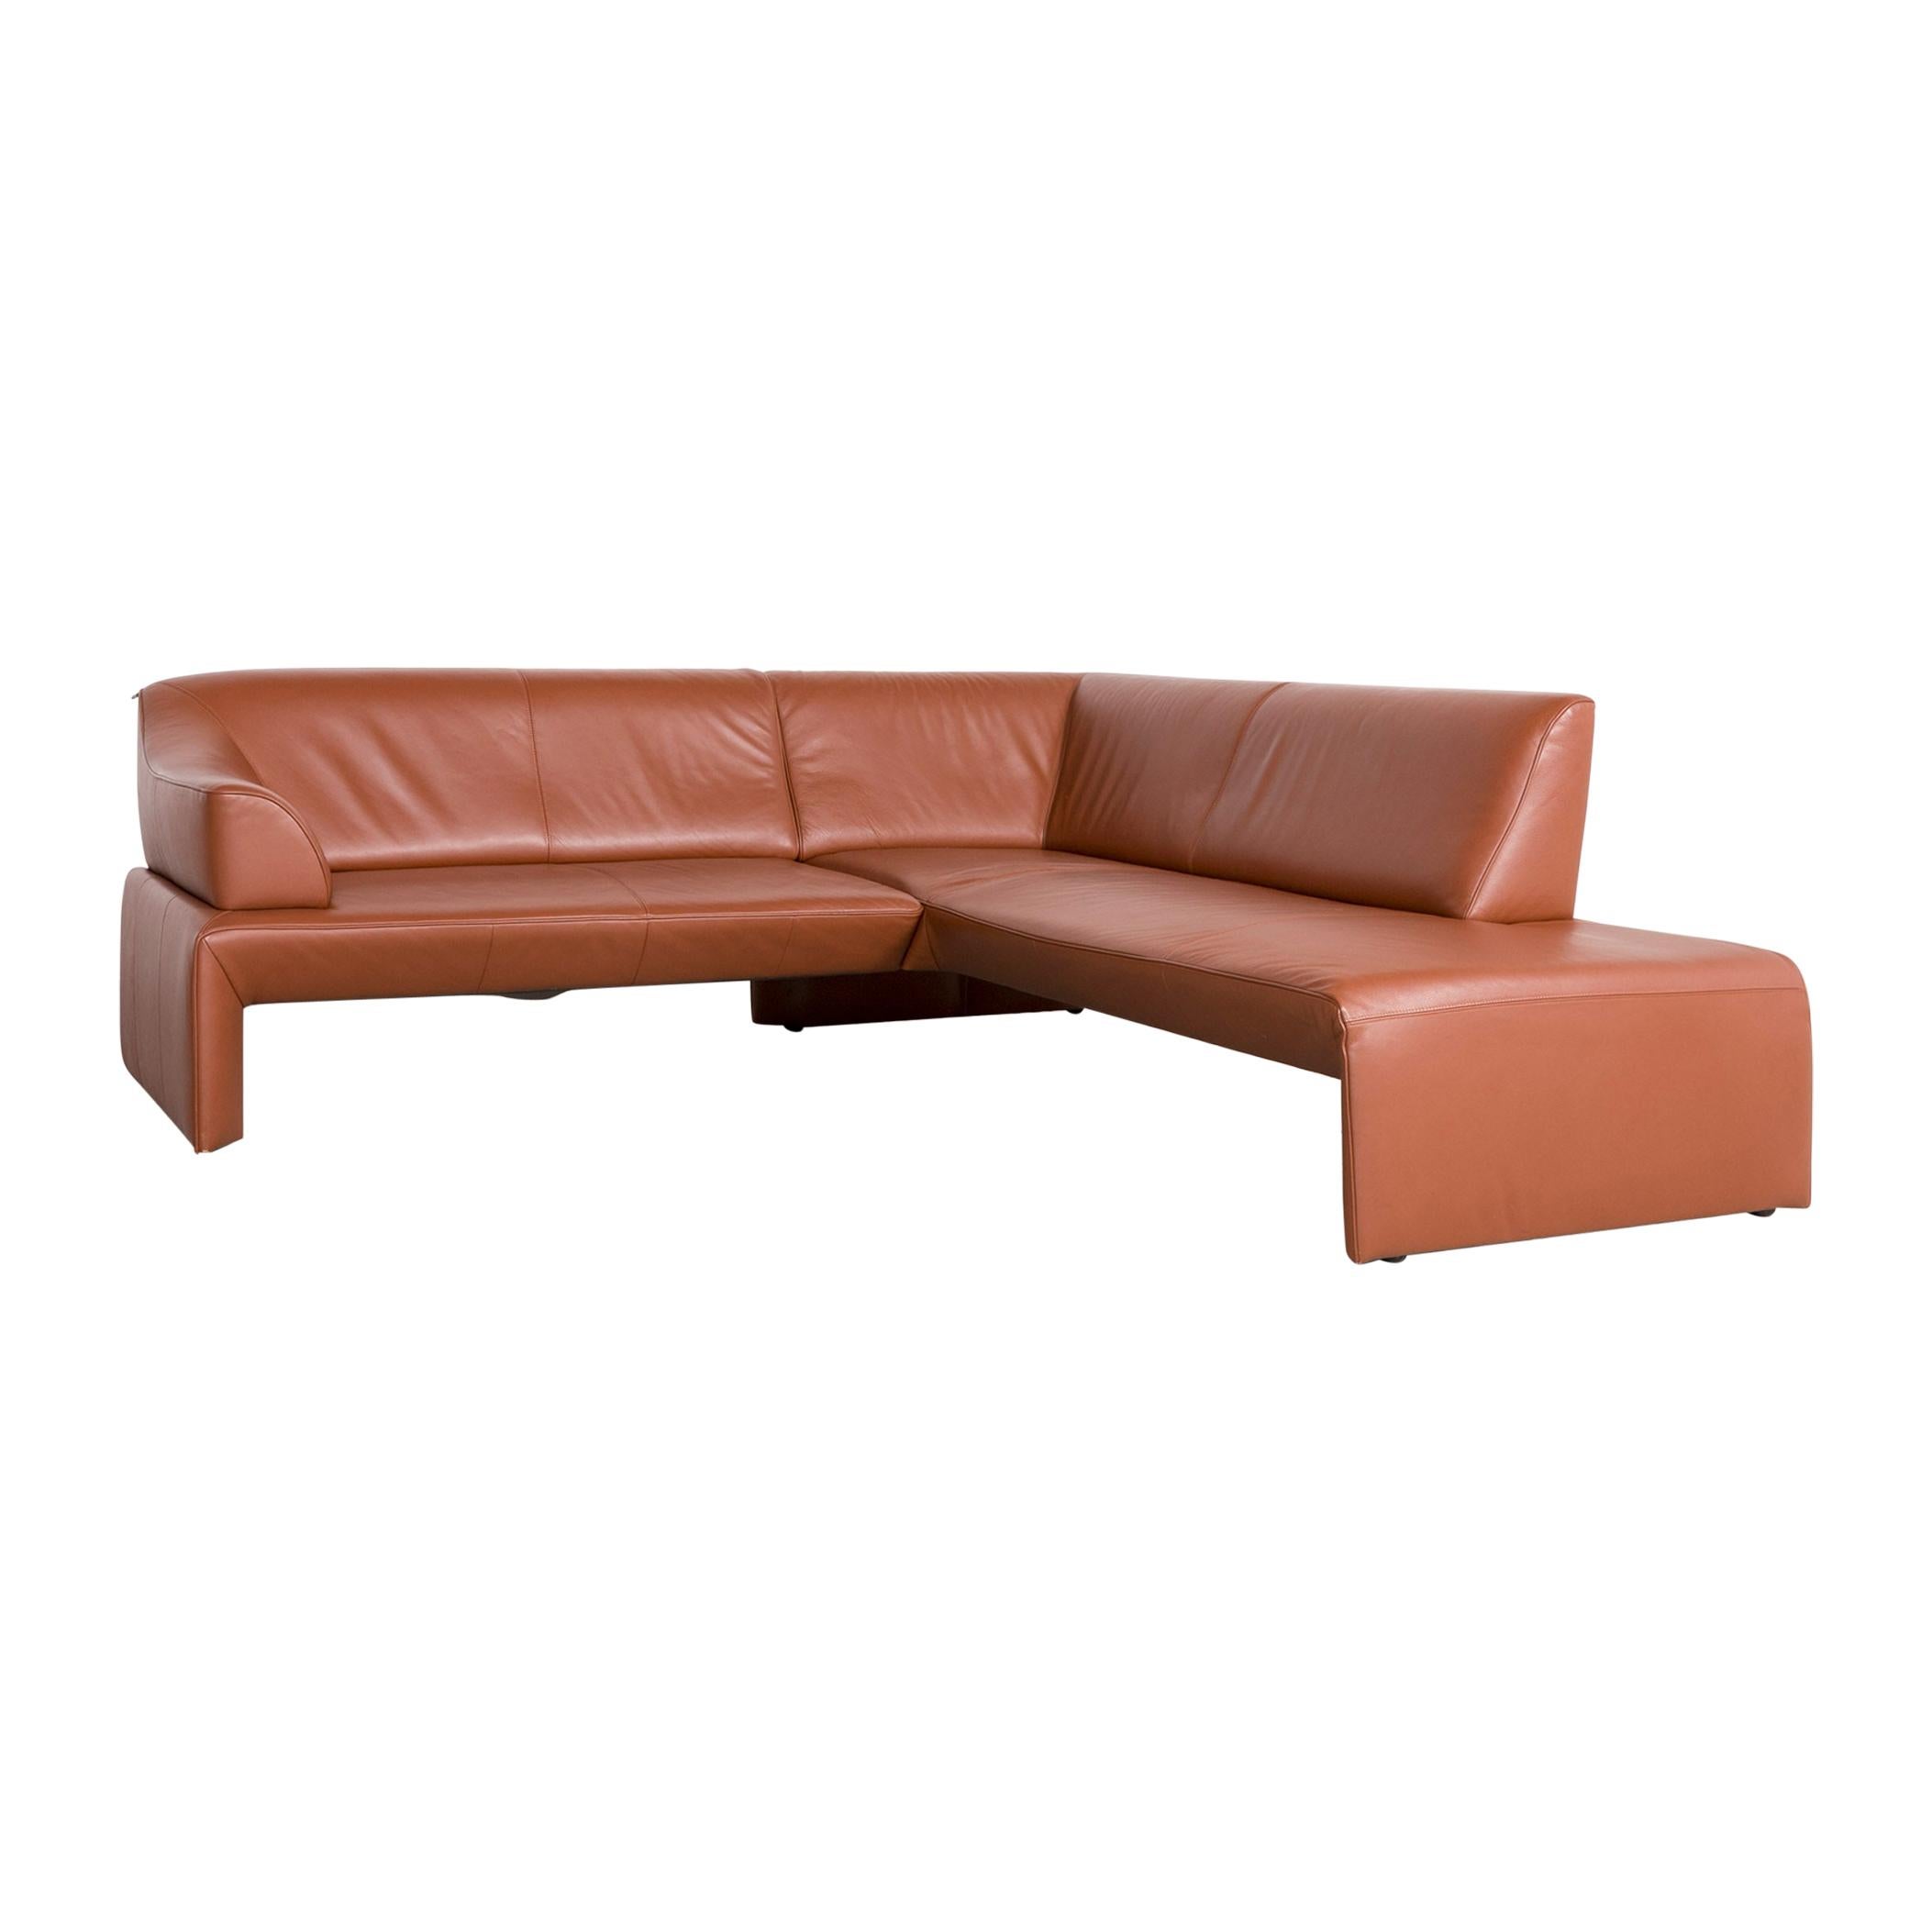 Laauser Designer Corner Sofa Brown Cognac Genuine Leather Sofa Couch For Sale